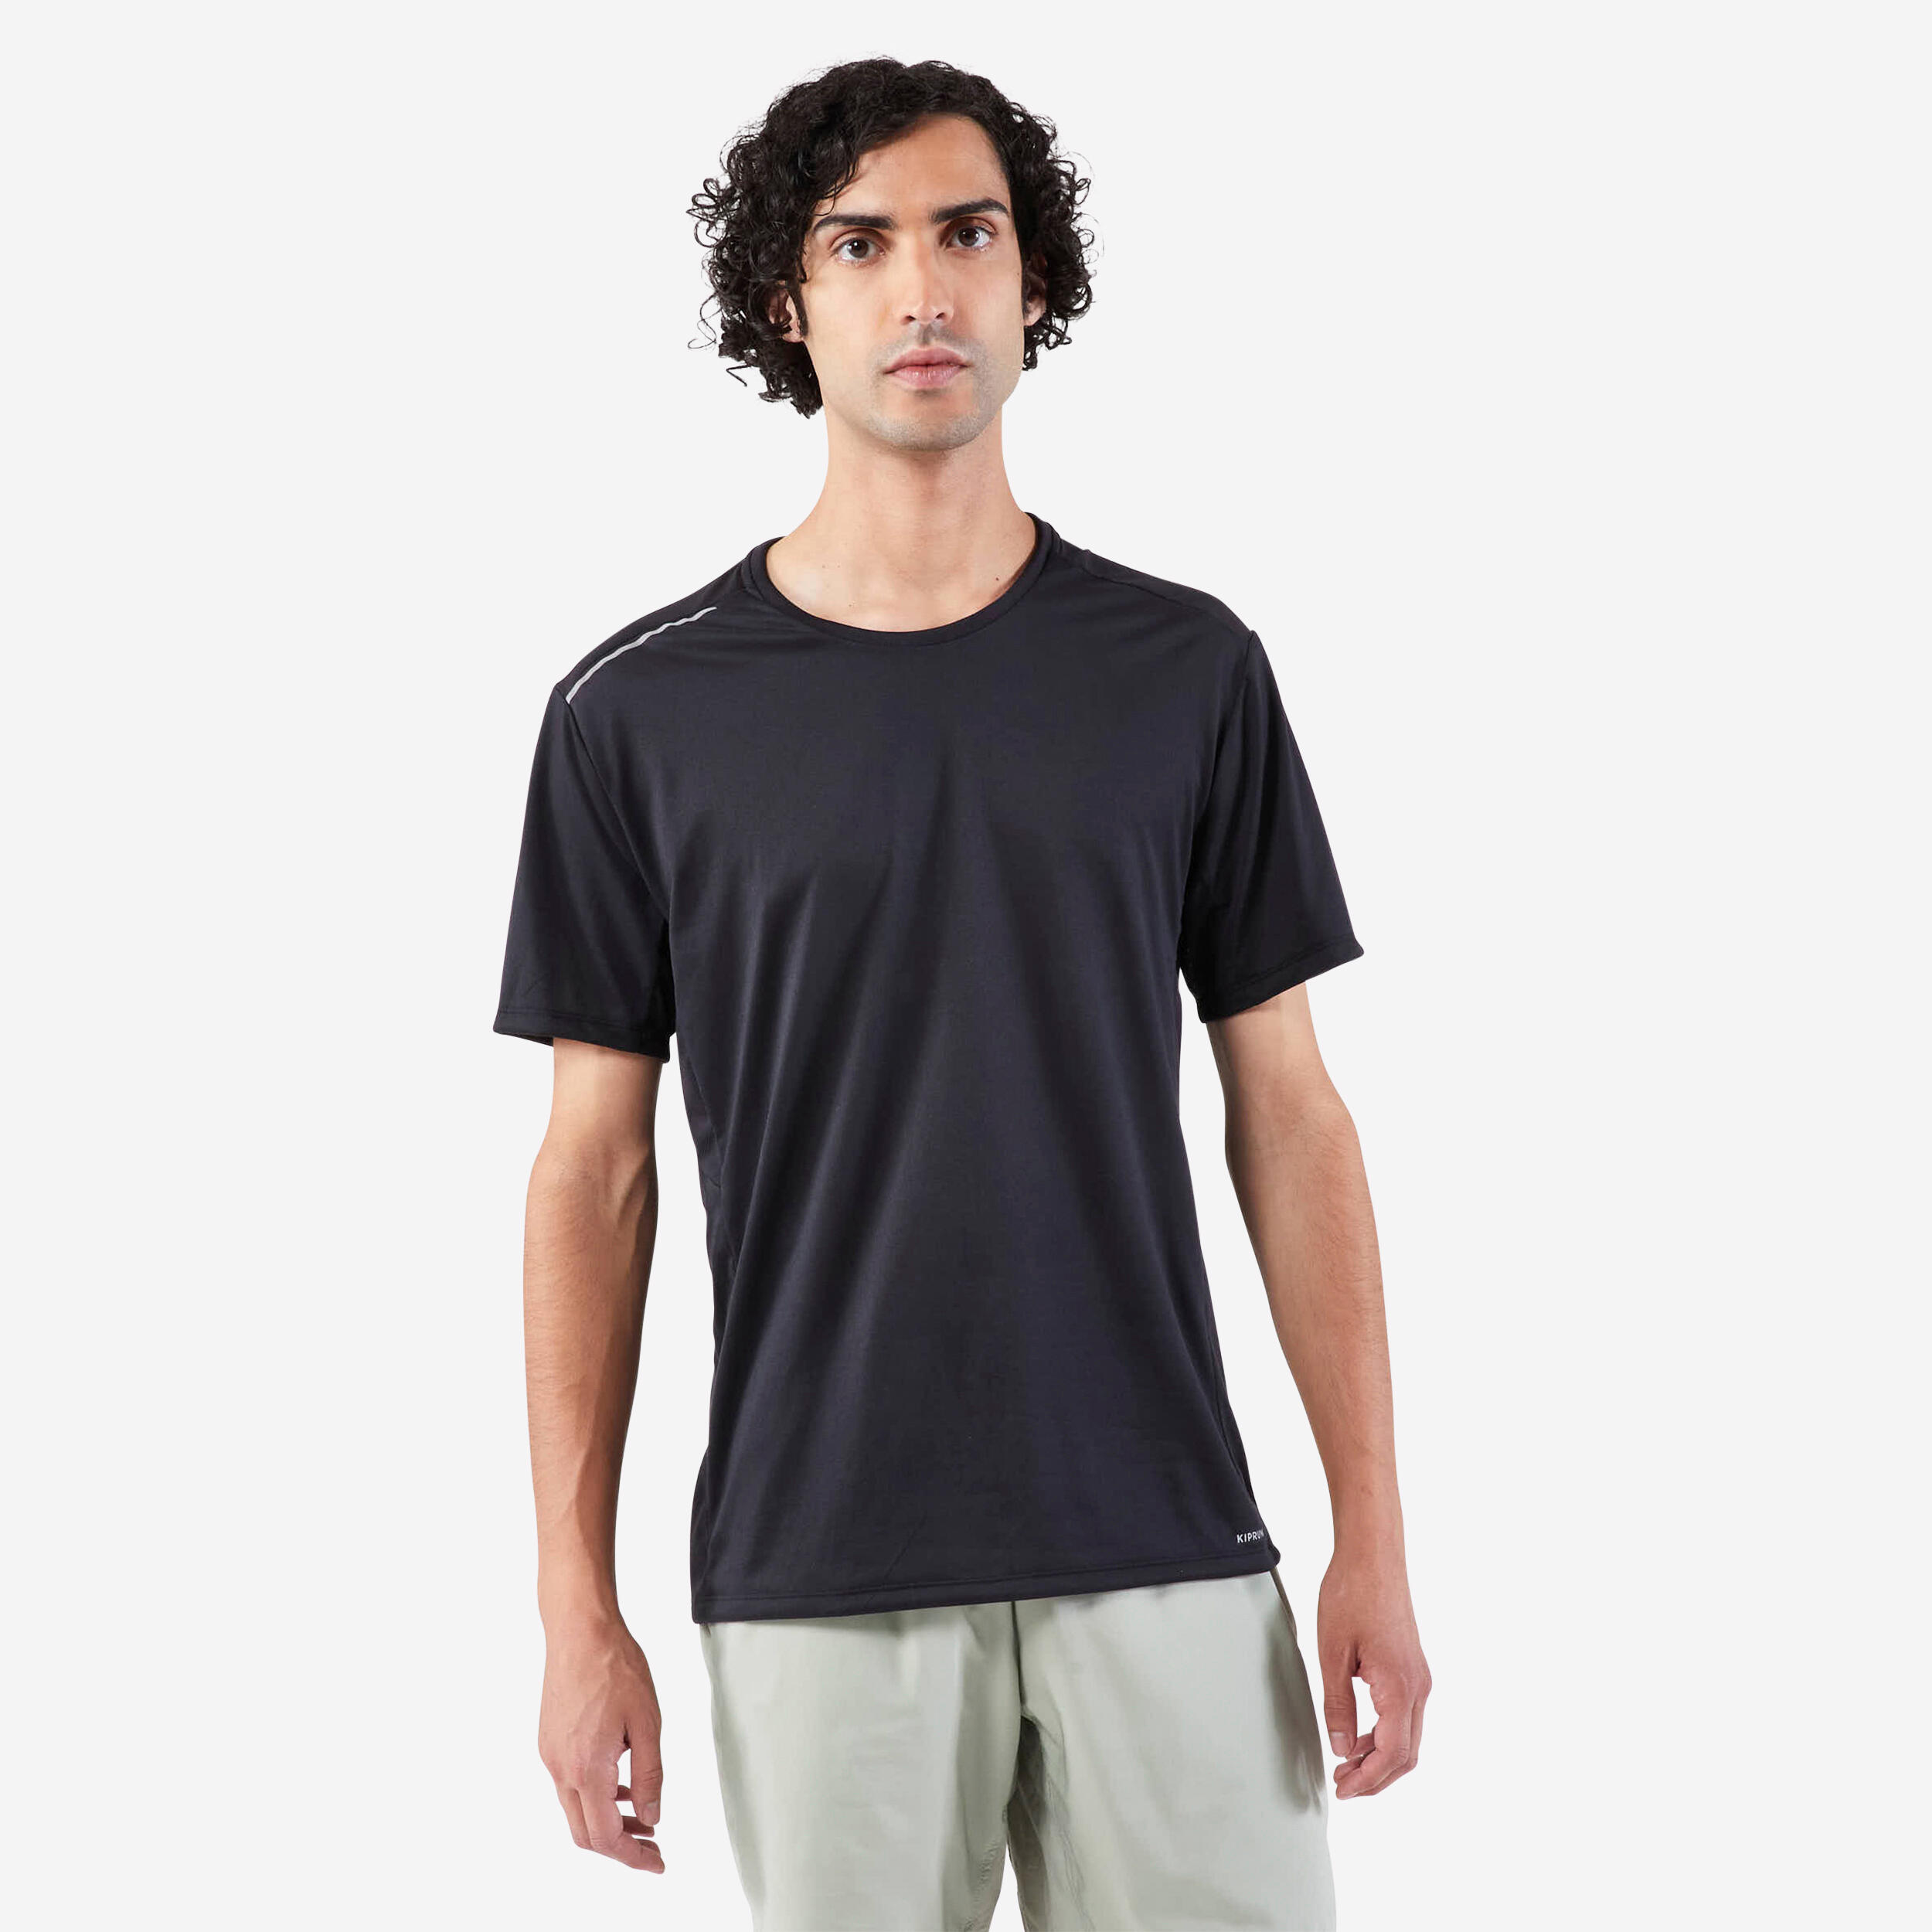 Men's Running T-Shirt - Dry Black - black - Kalenji - Decathlon